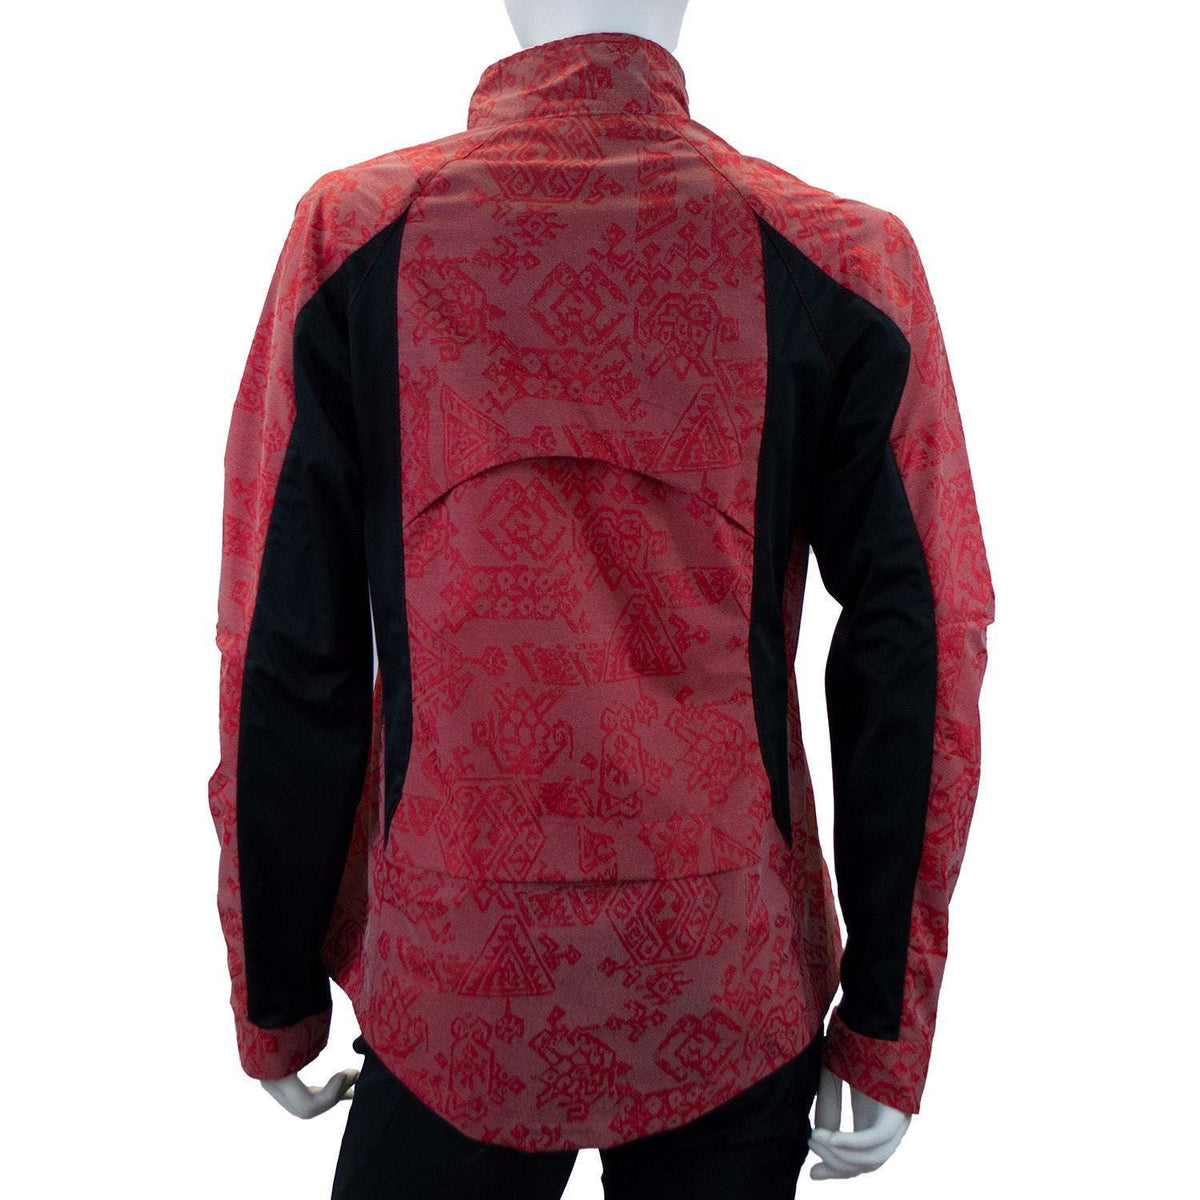 Bristol Women's Reflective Jacket in Red Aztec/Black